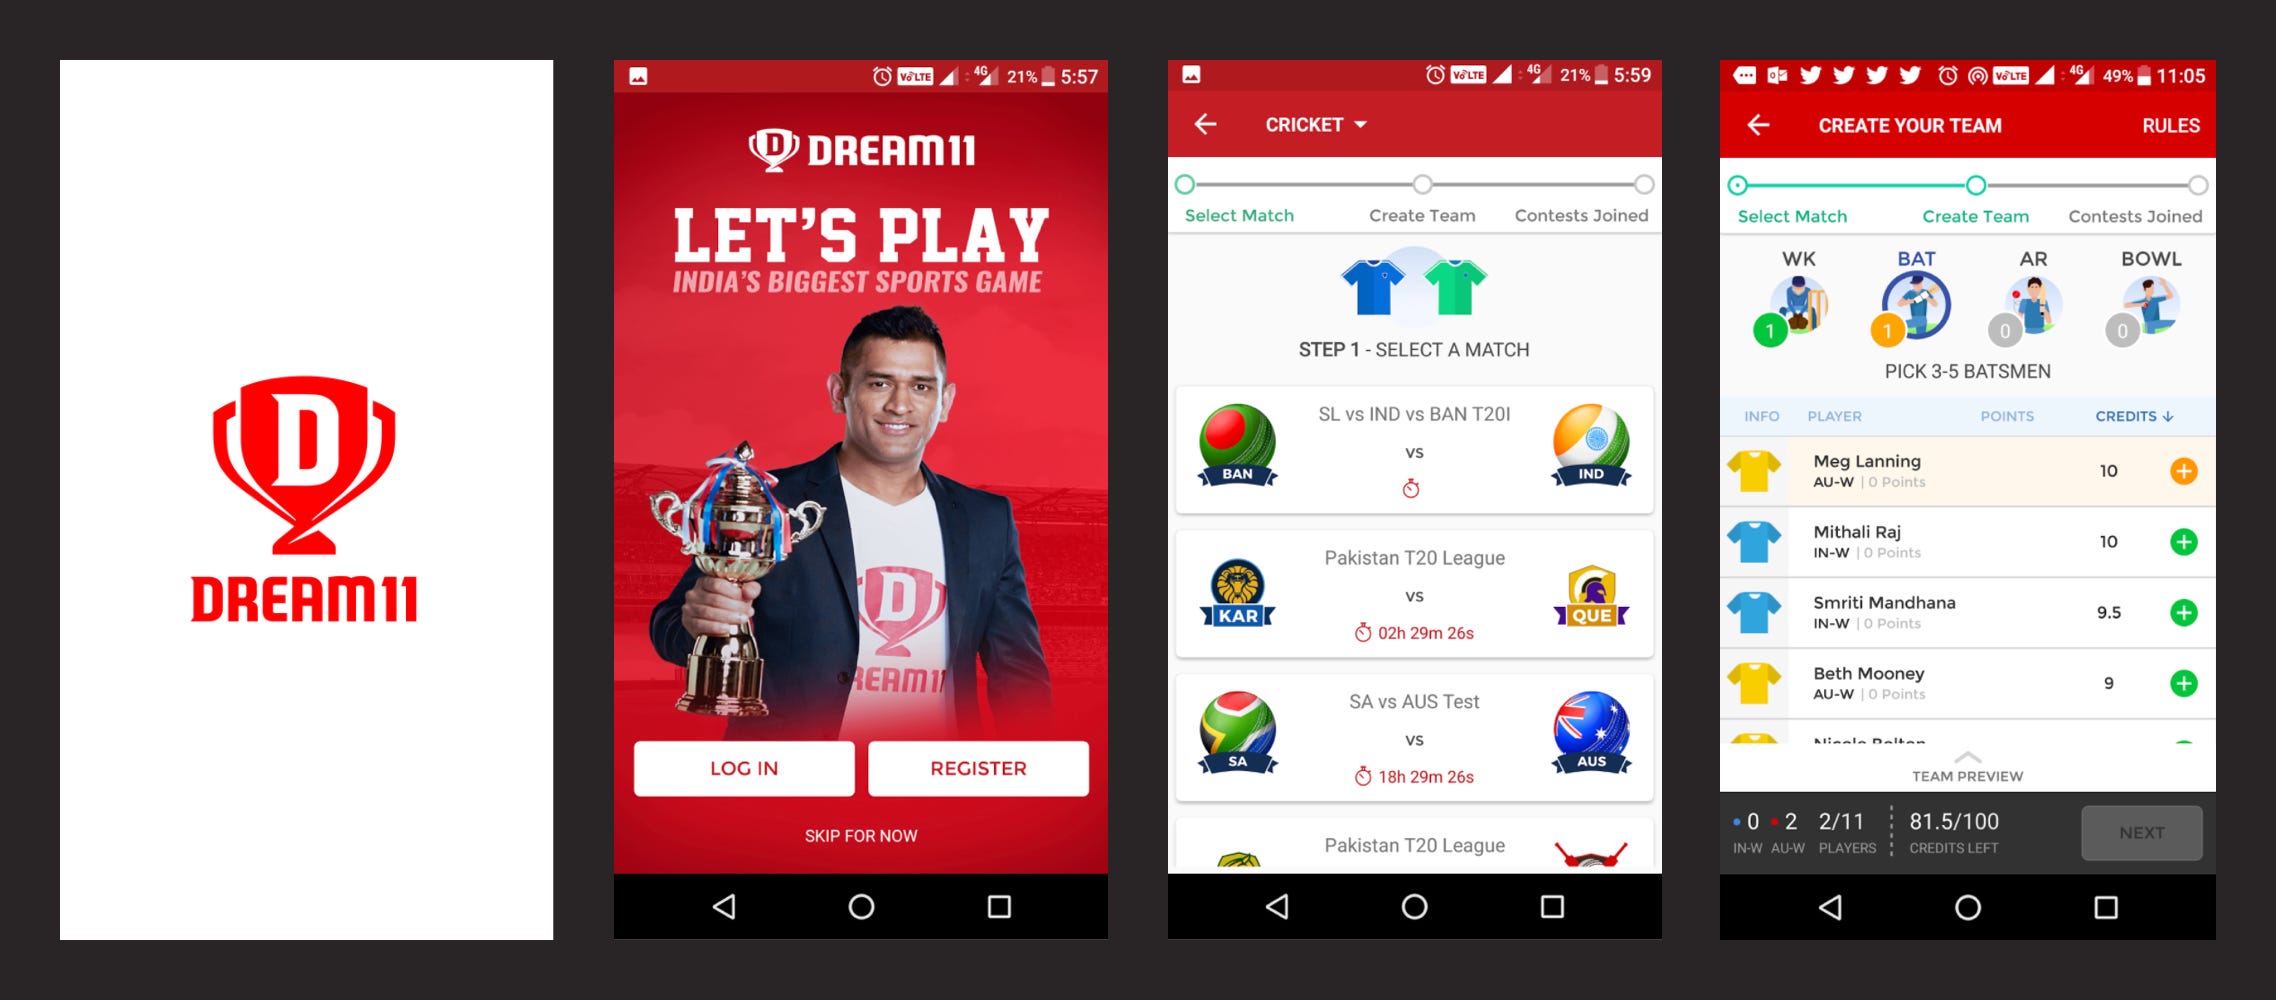 Enjoy Fantasy Sports With the Dream11 App